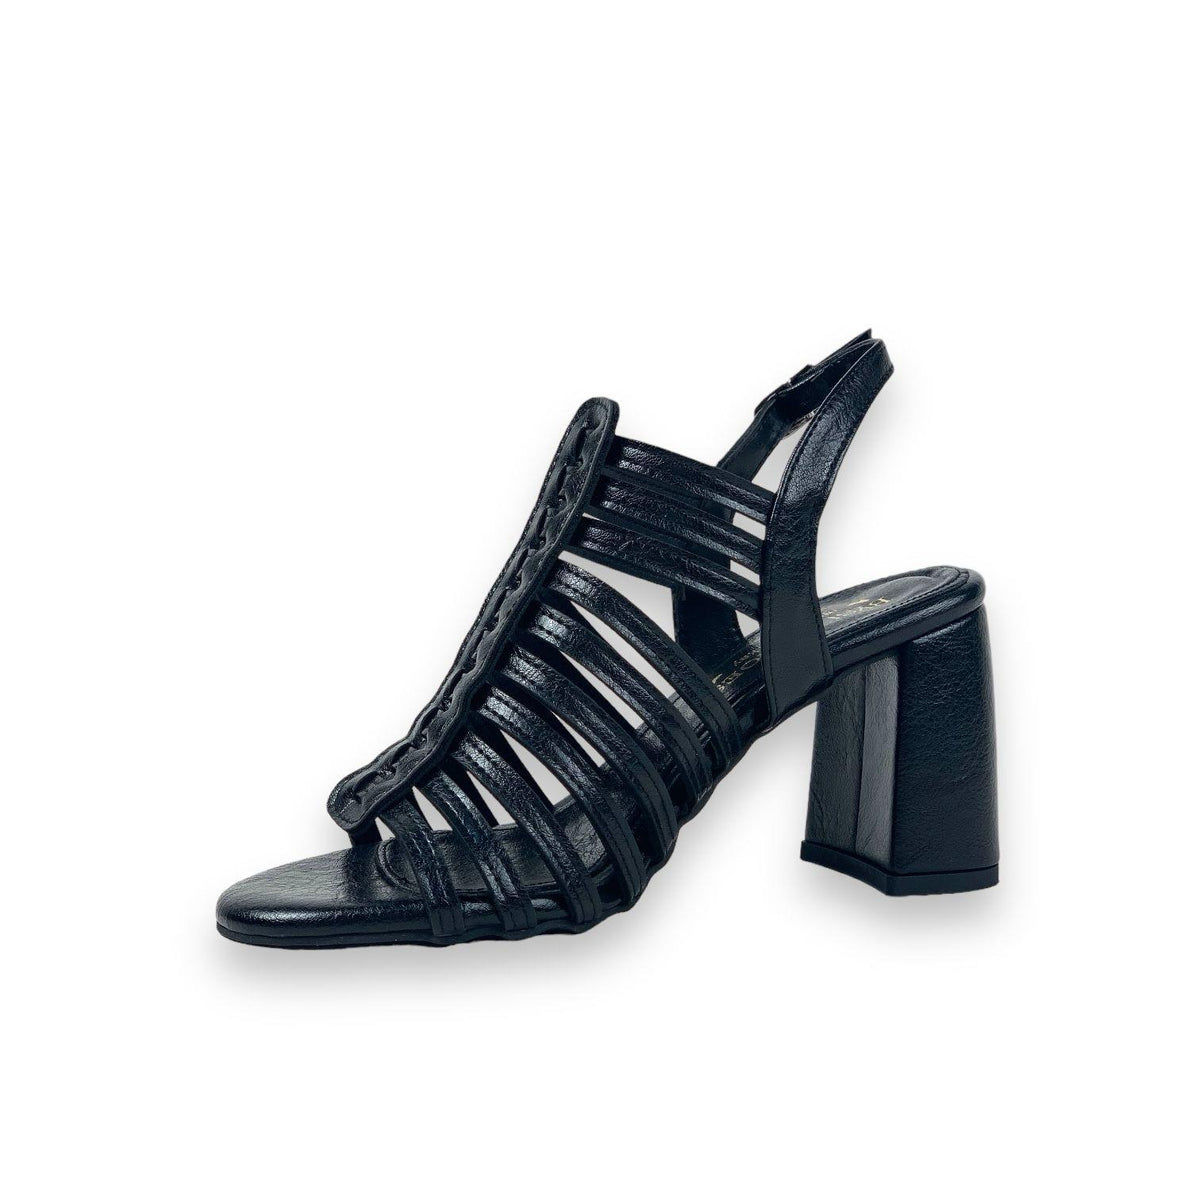 Women's Pert Black Thick High Heel Shoes Sandals 9 cm - STREETMODE ™